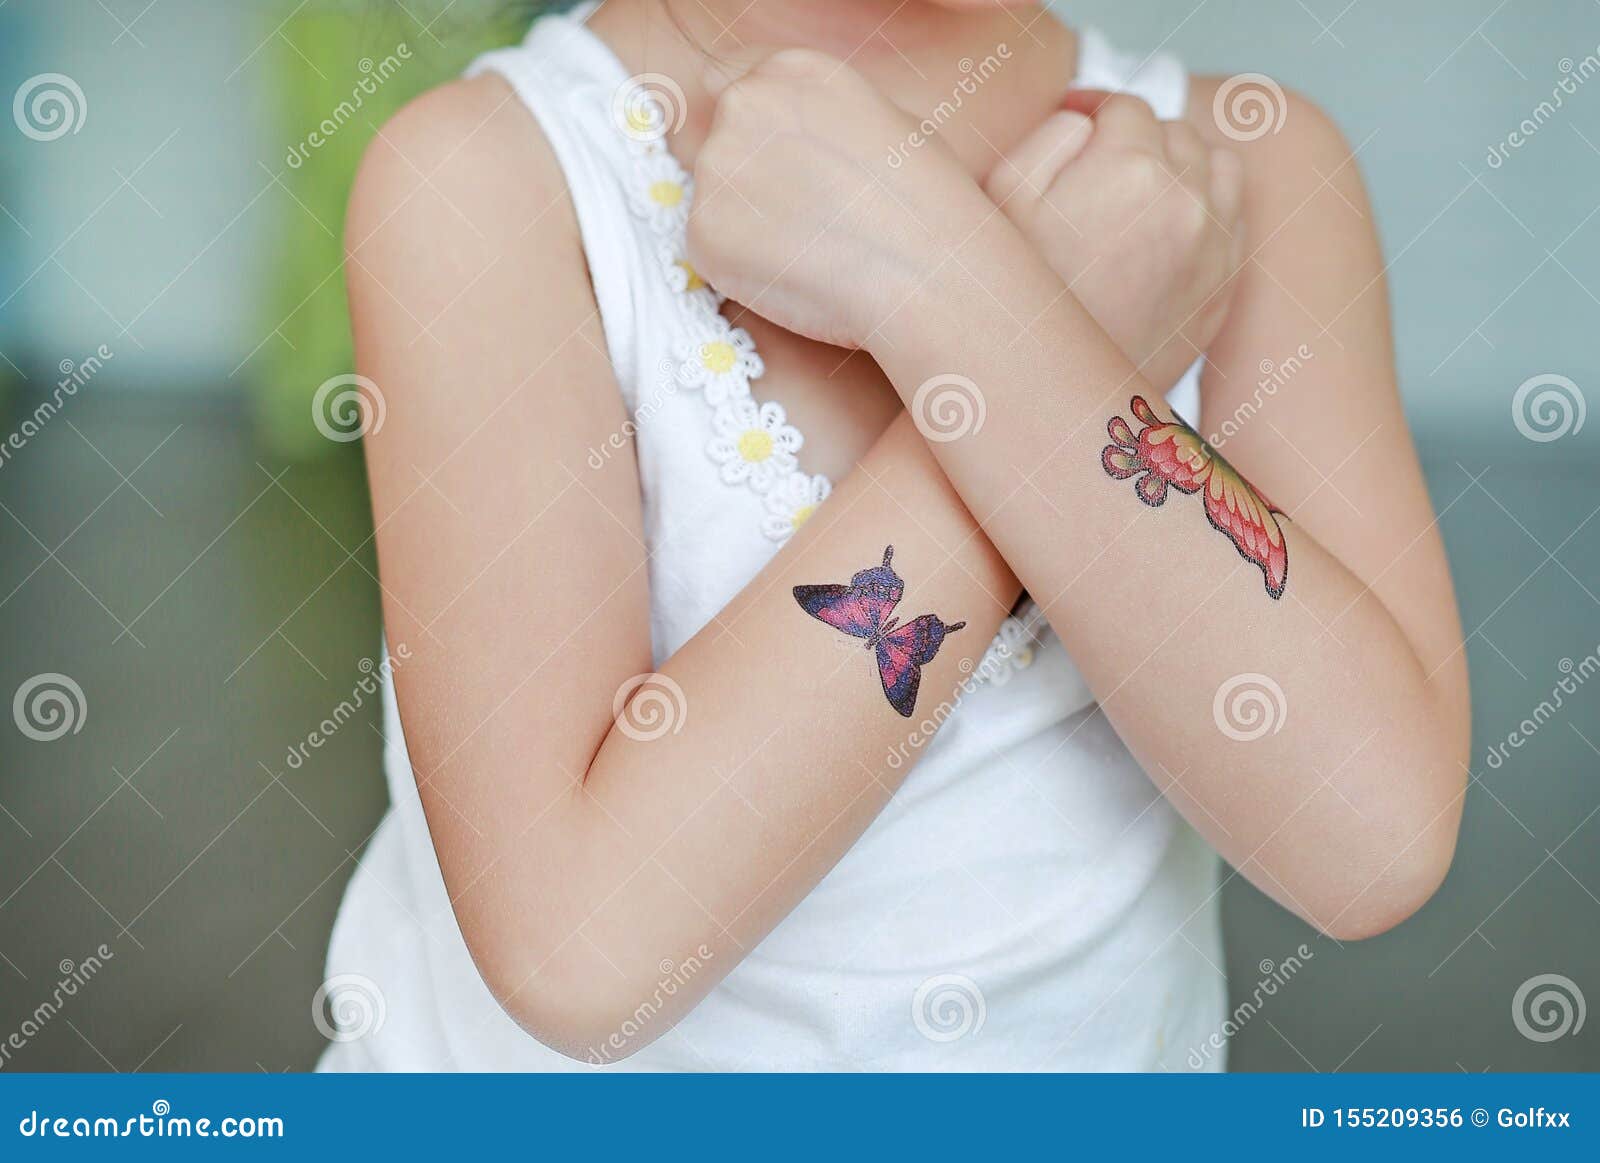 1pcspack temporary tattoo sticker set hand rose tattoo black flower mehndi  stickers for hand zombie tattoos men boys  Wish